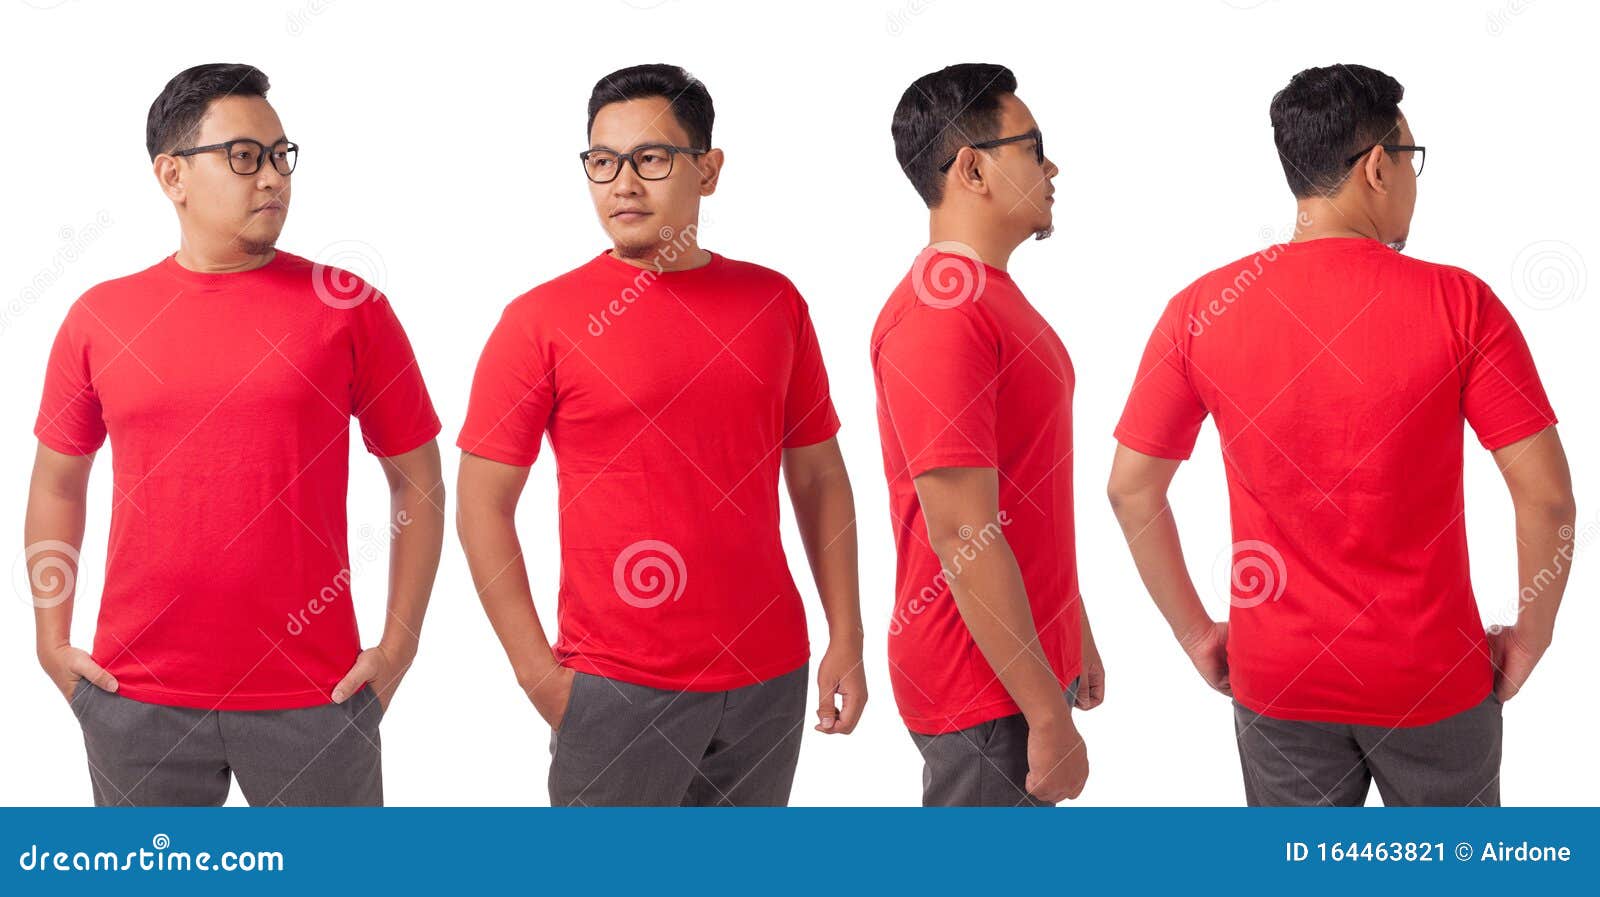 Download Red Shirt Design Template Stock Image Image Of Closeup 164463821